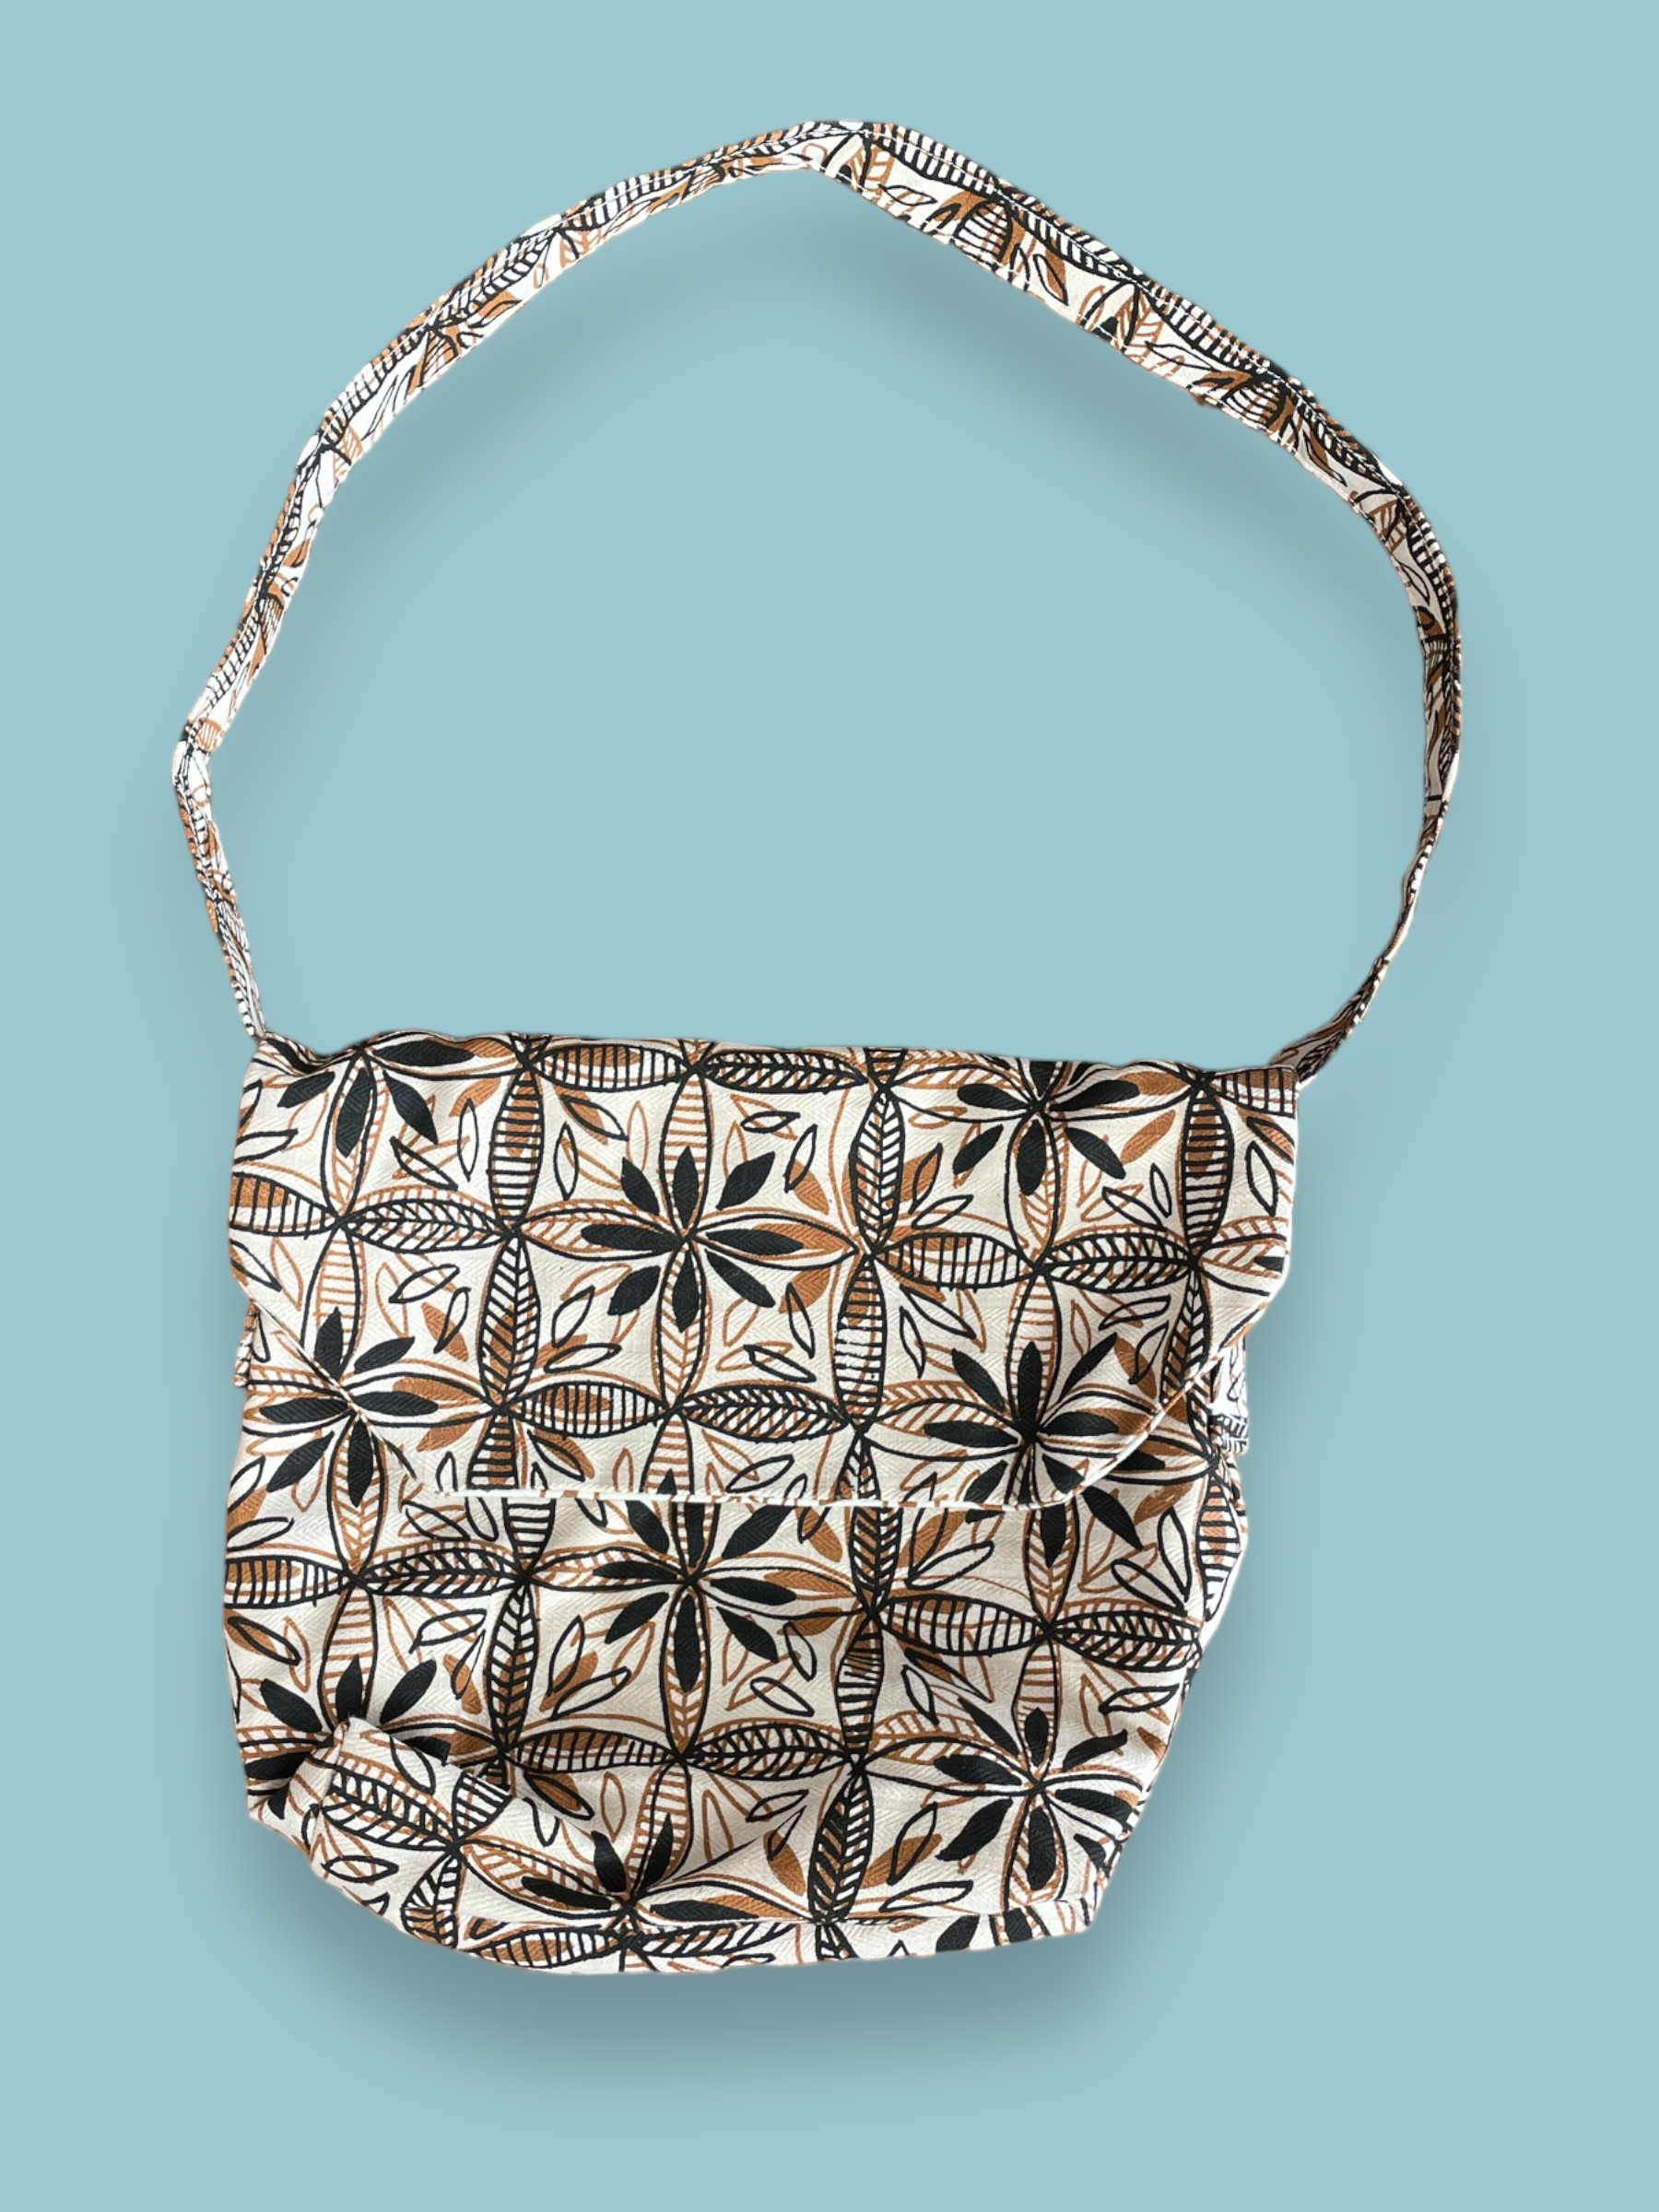 satchel with handprinted stylised frangipani flower design